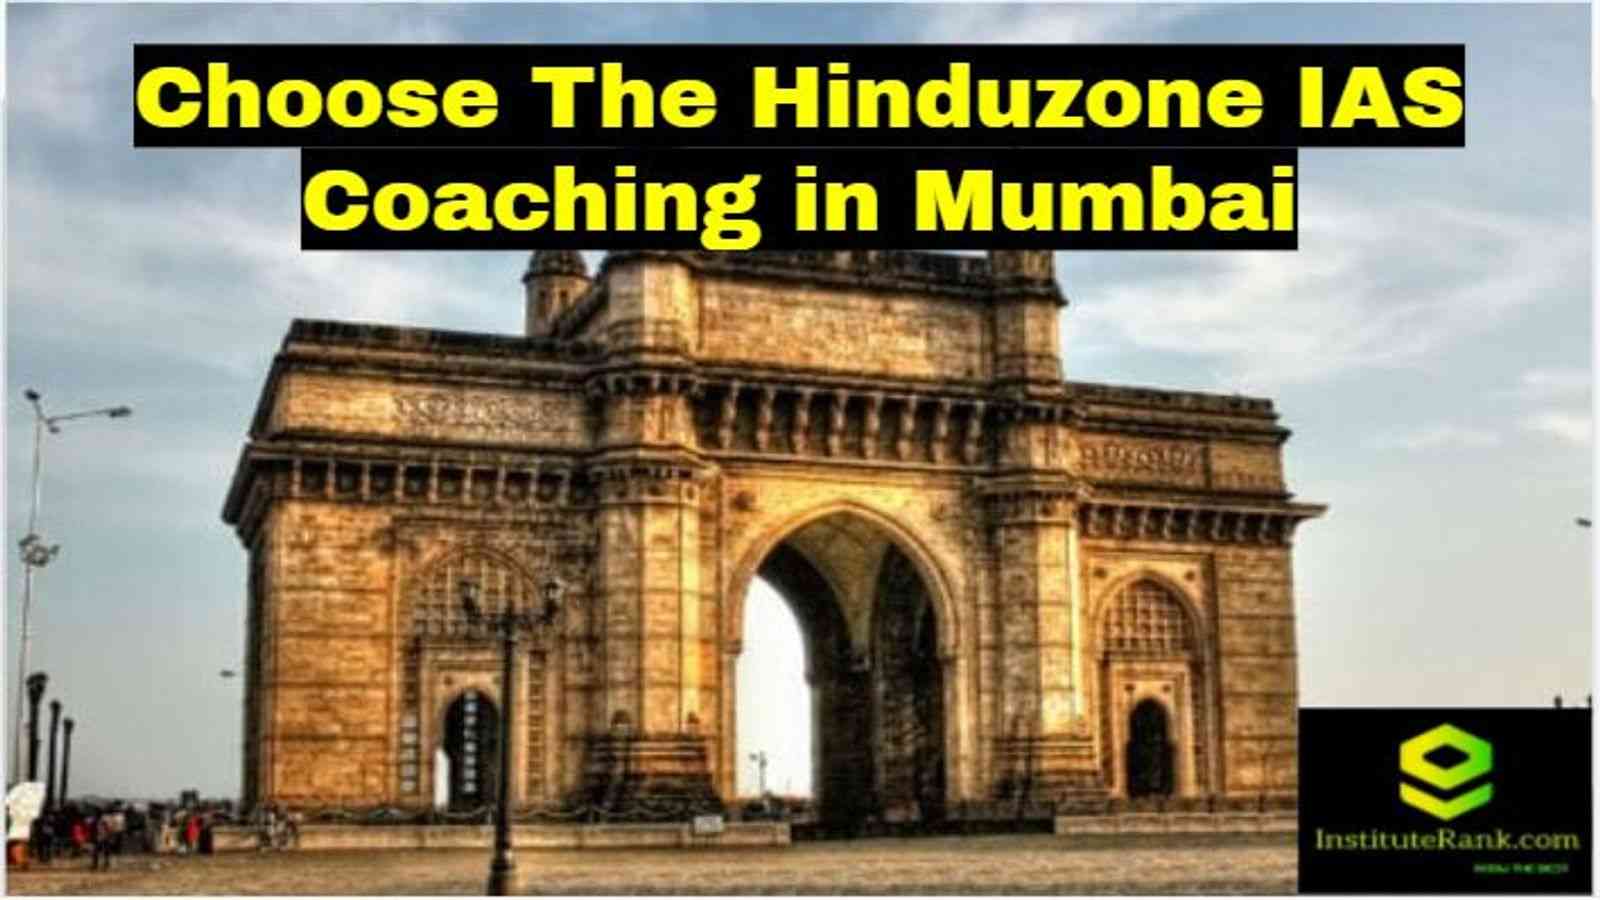 Choose The HinduZone IAS Coaching in Mumbai